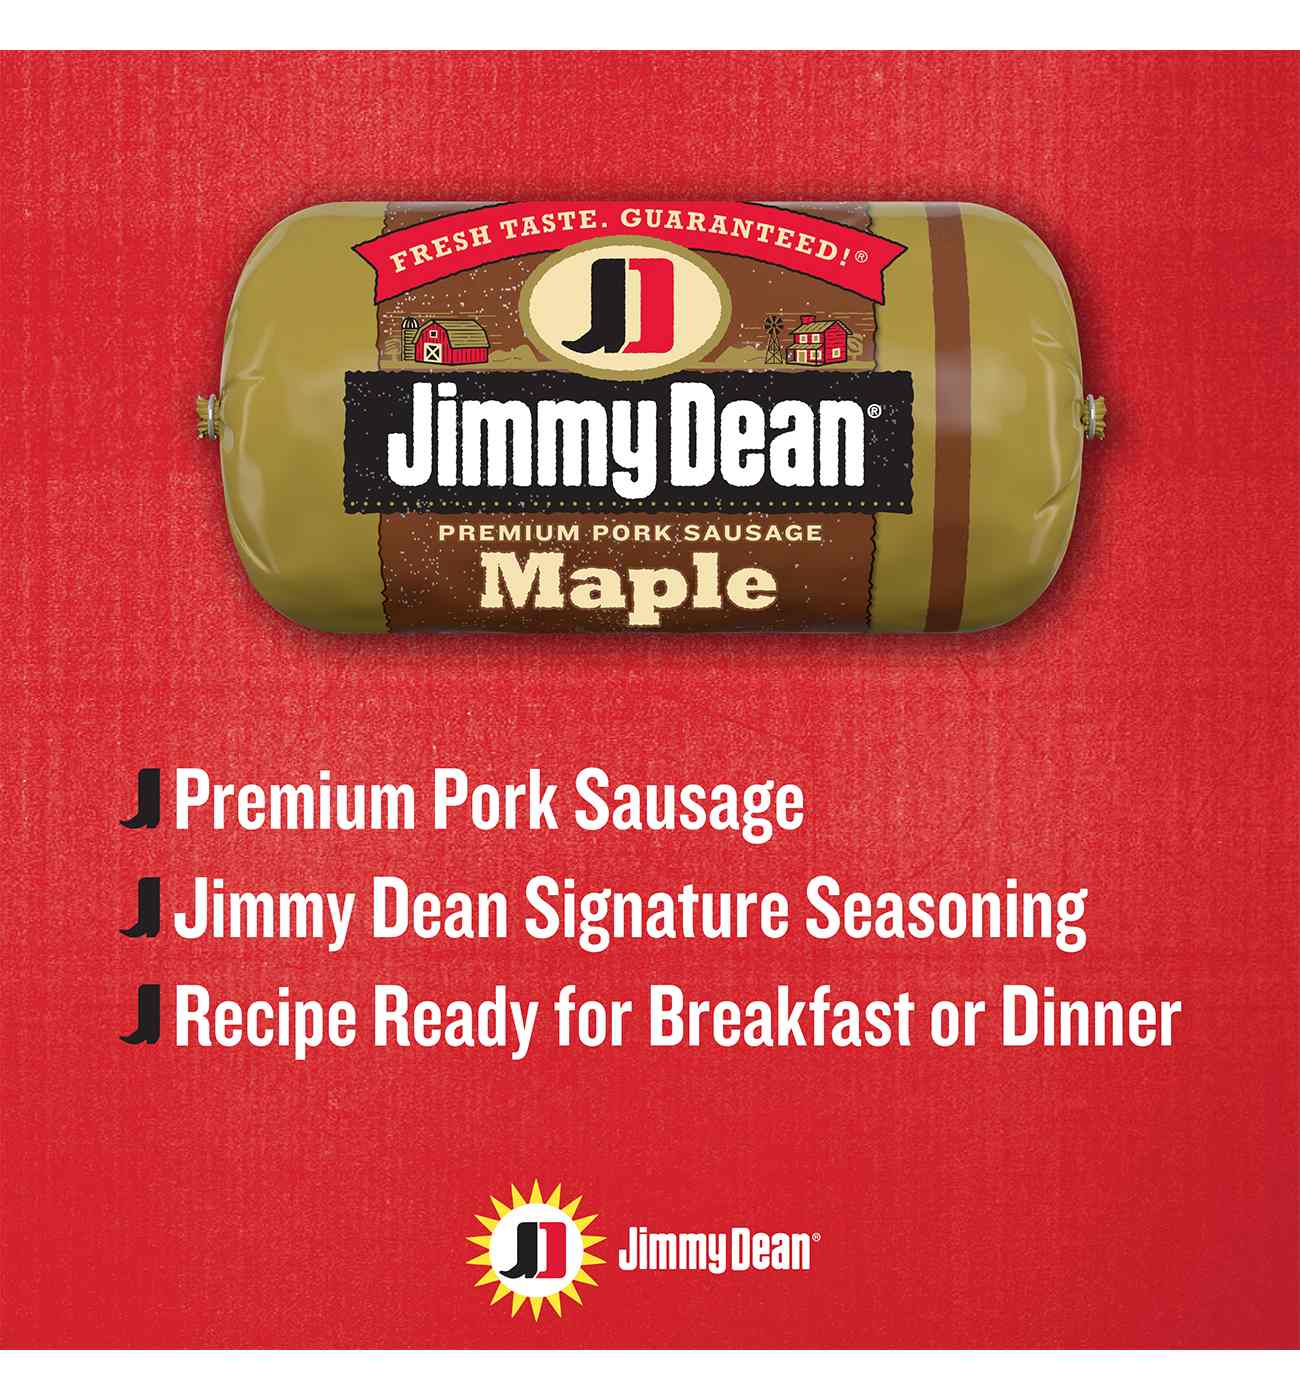 Jimmy Dean Premium Pork Breakfast Sausage - Maple; image 3 of 5